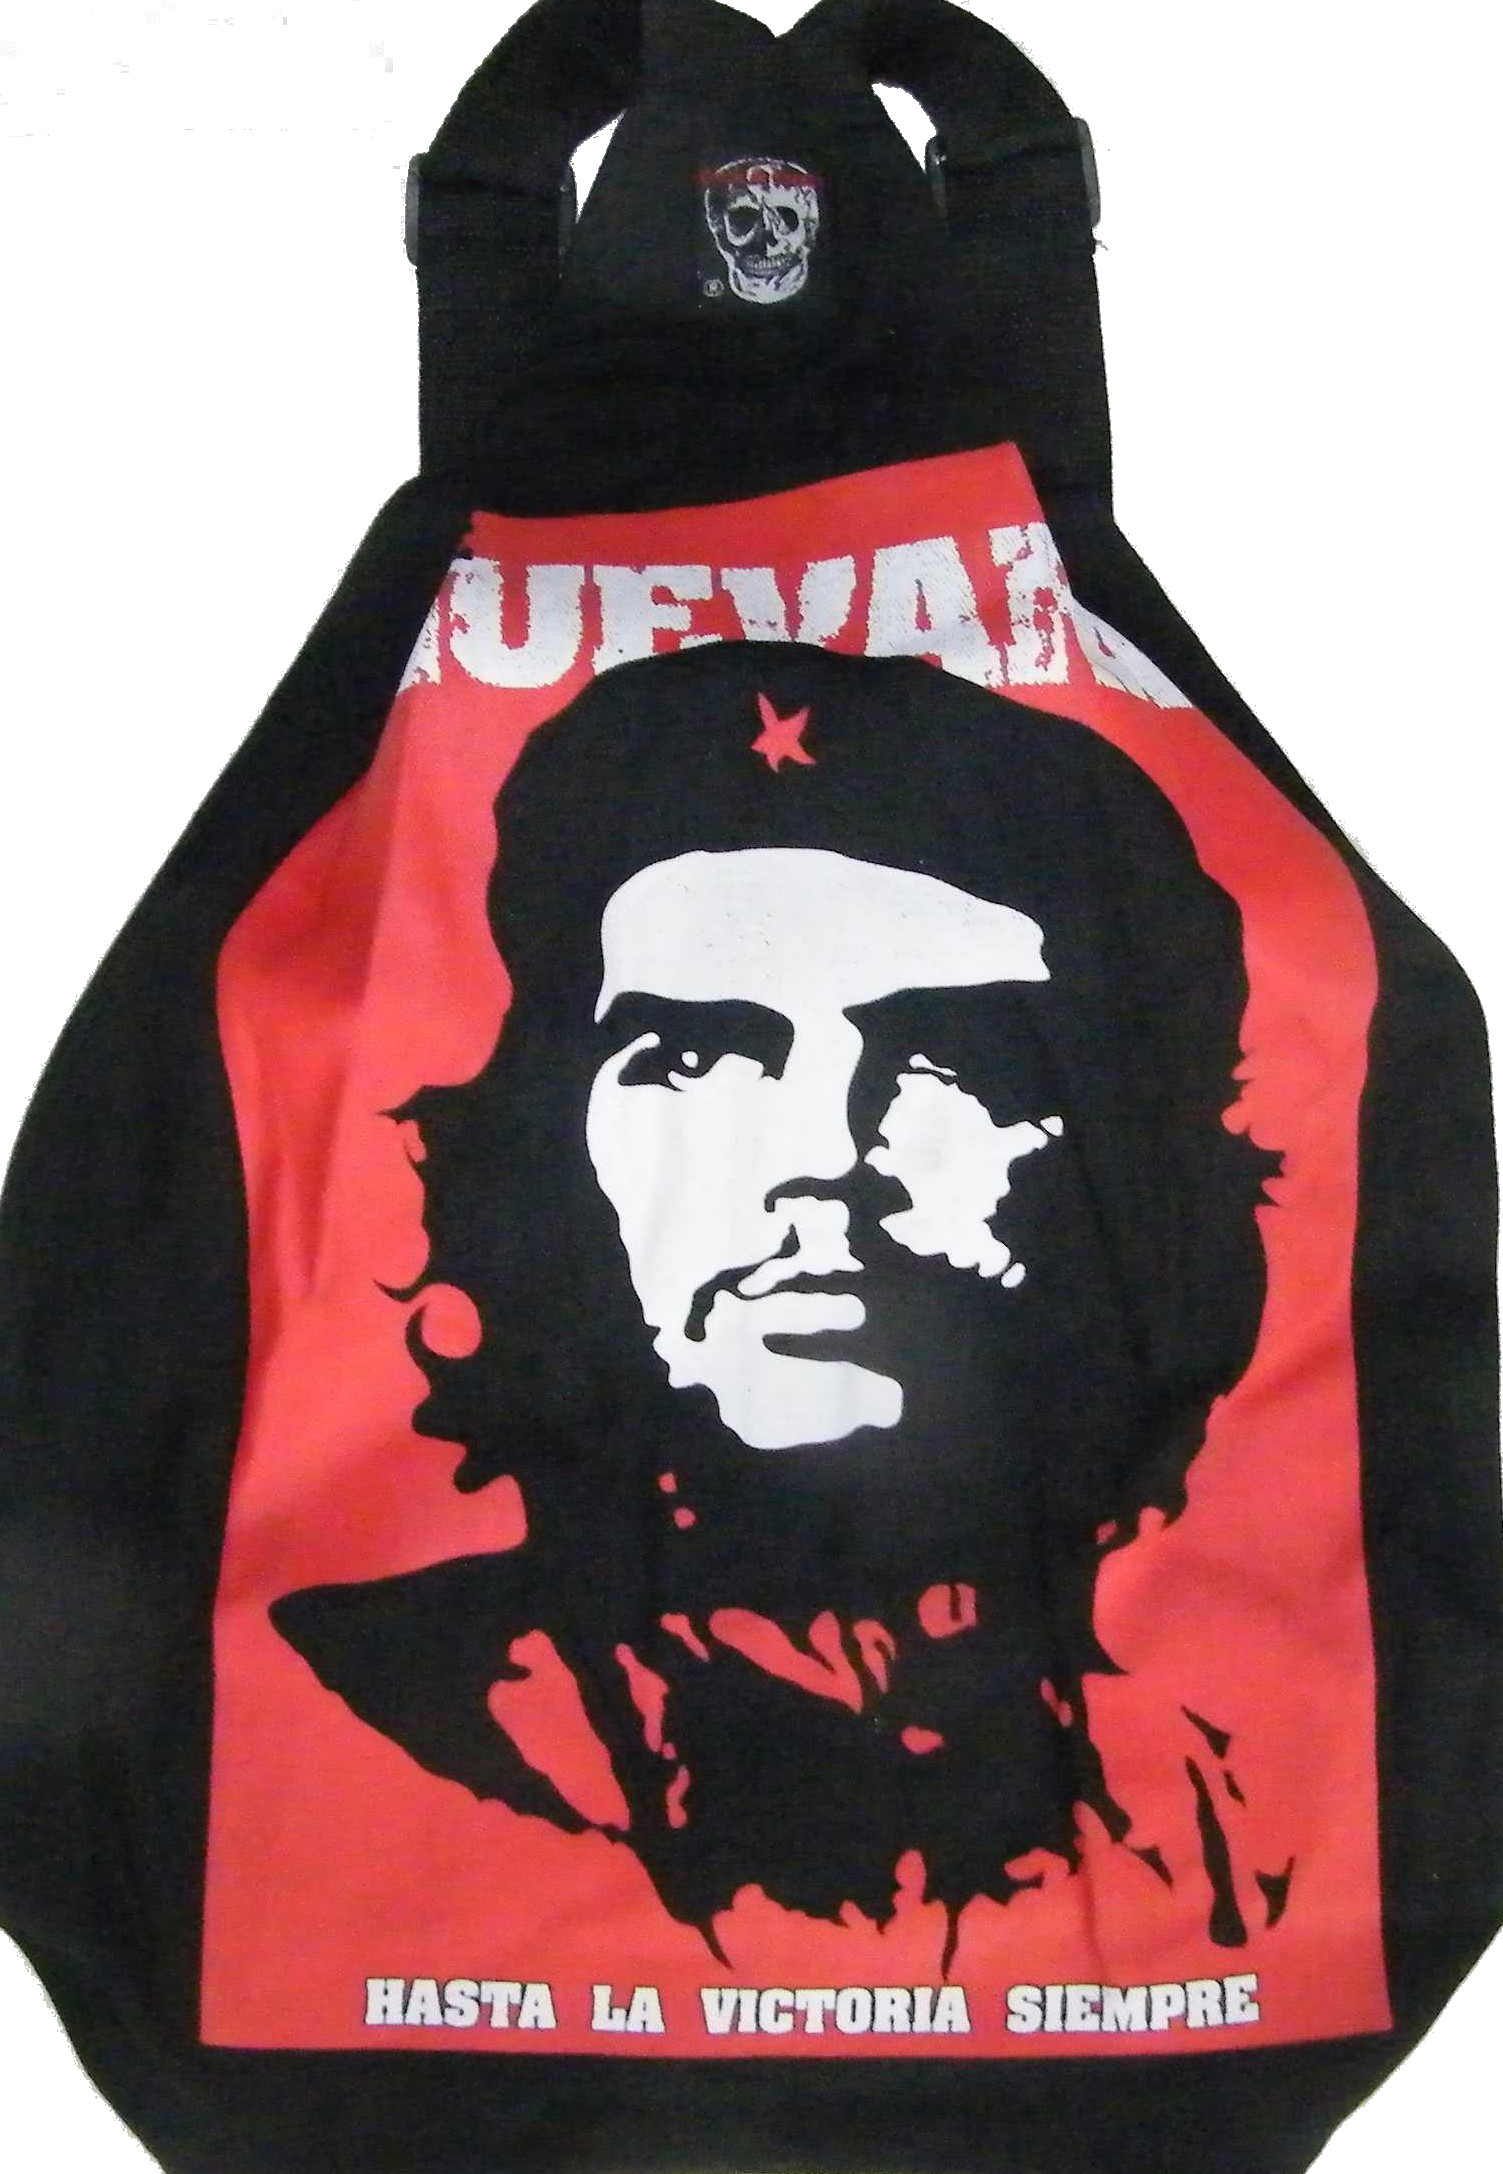 Che Guevara Backpacks for Sale